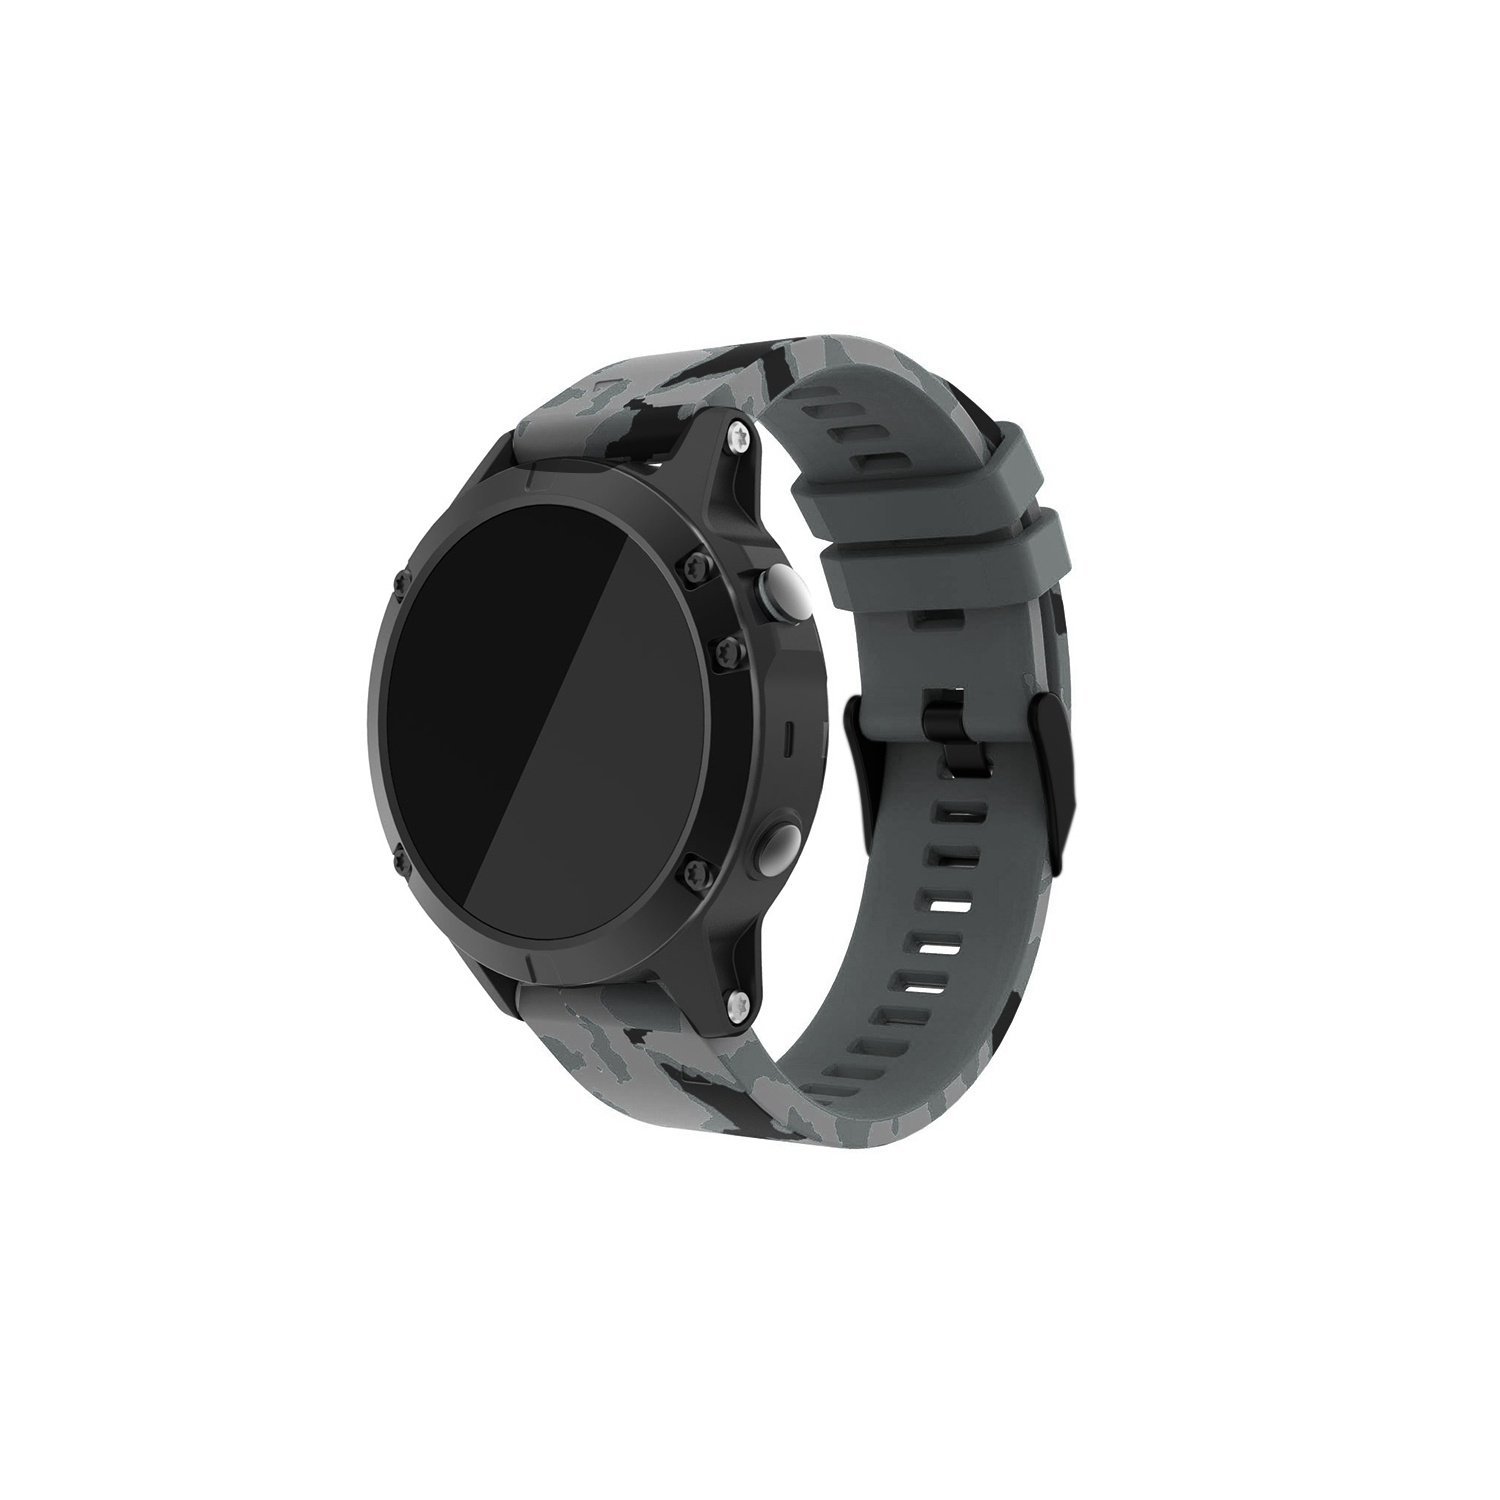 StrapsCo QuickFit 22 Rubber Watch Band Strap with Black Buckle for Garmin Fenix 5 & Forerunner 935 & Instinct - Grey Camo